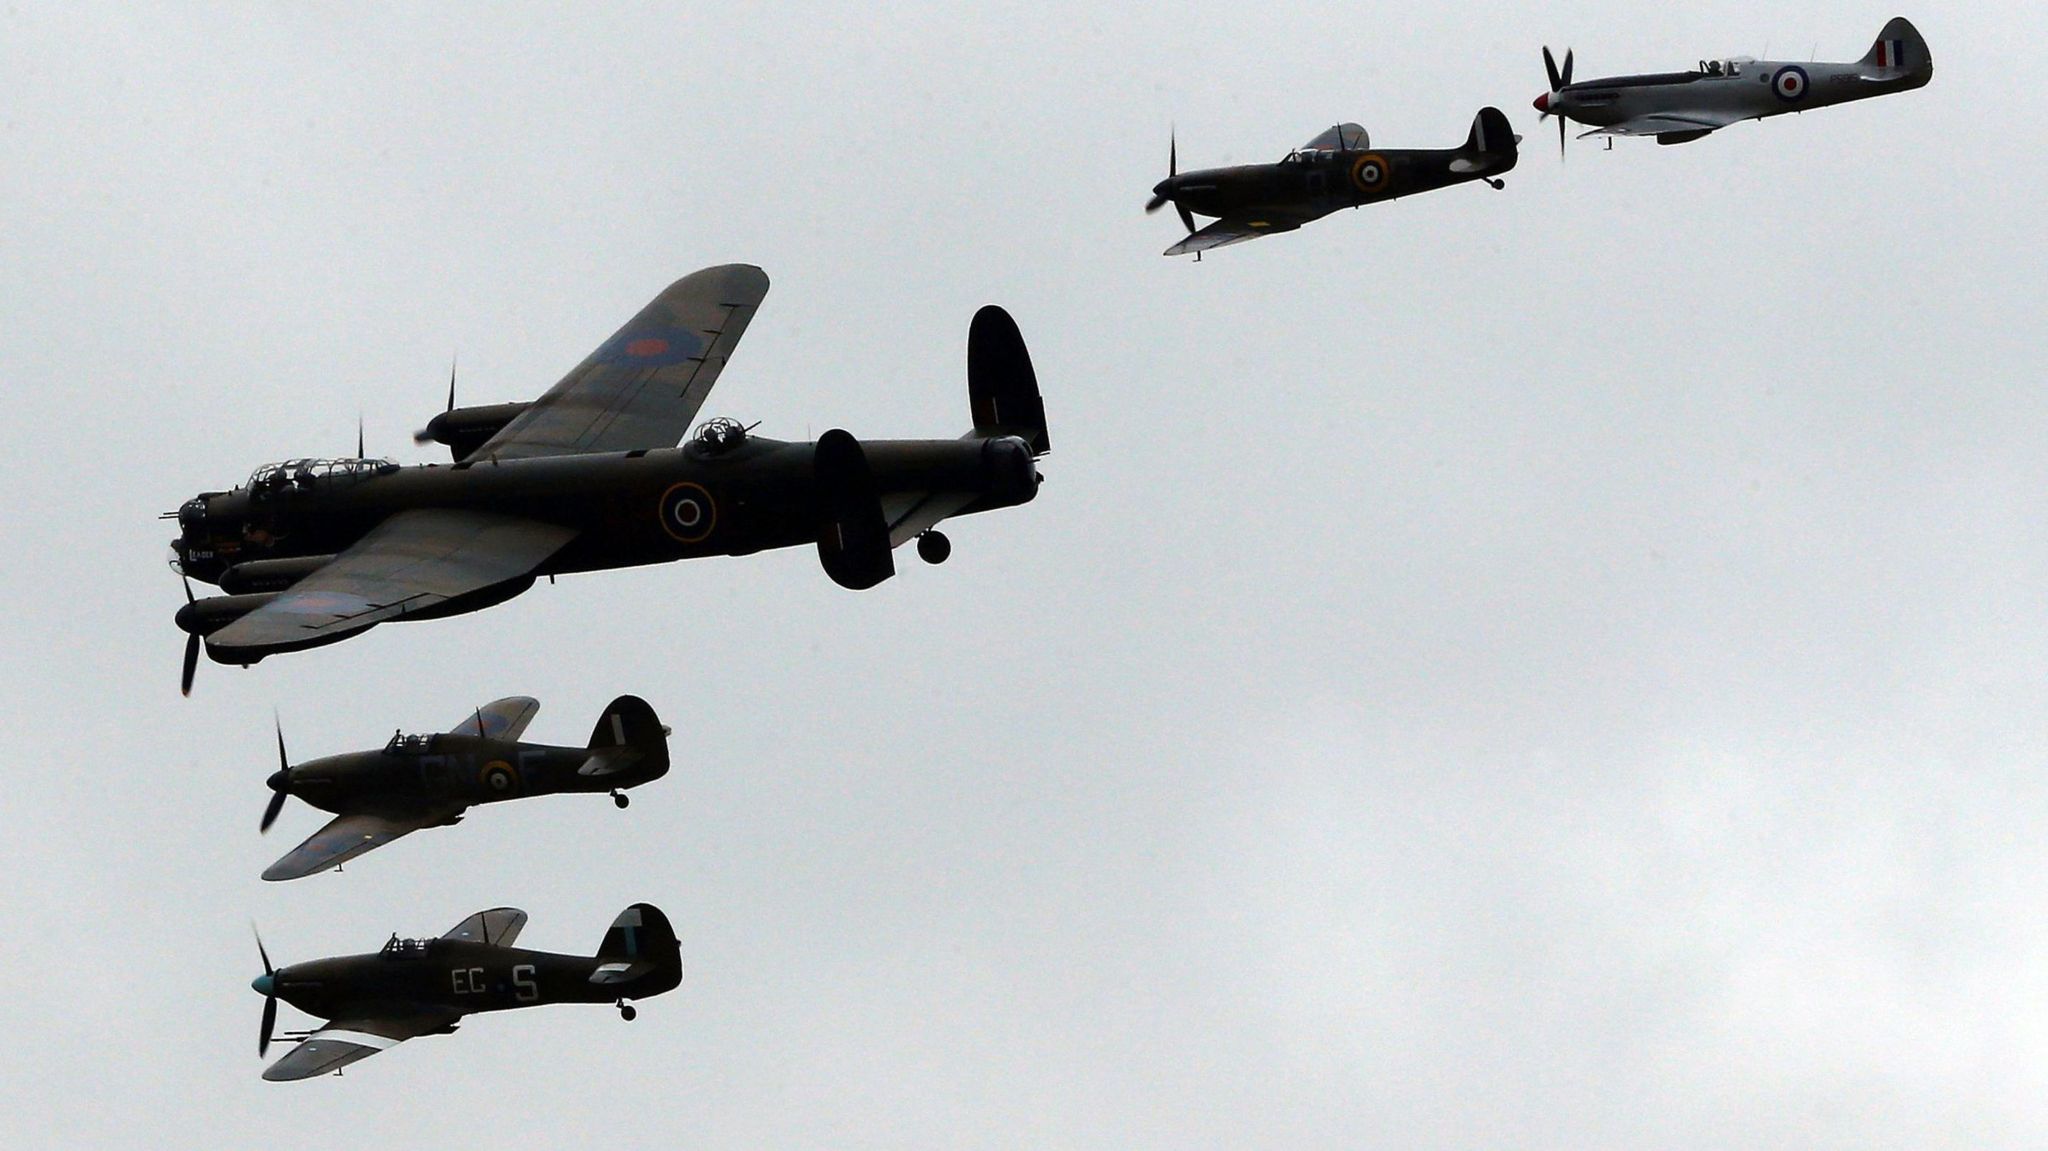 Battle of Britain Memorial Flight planes